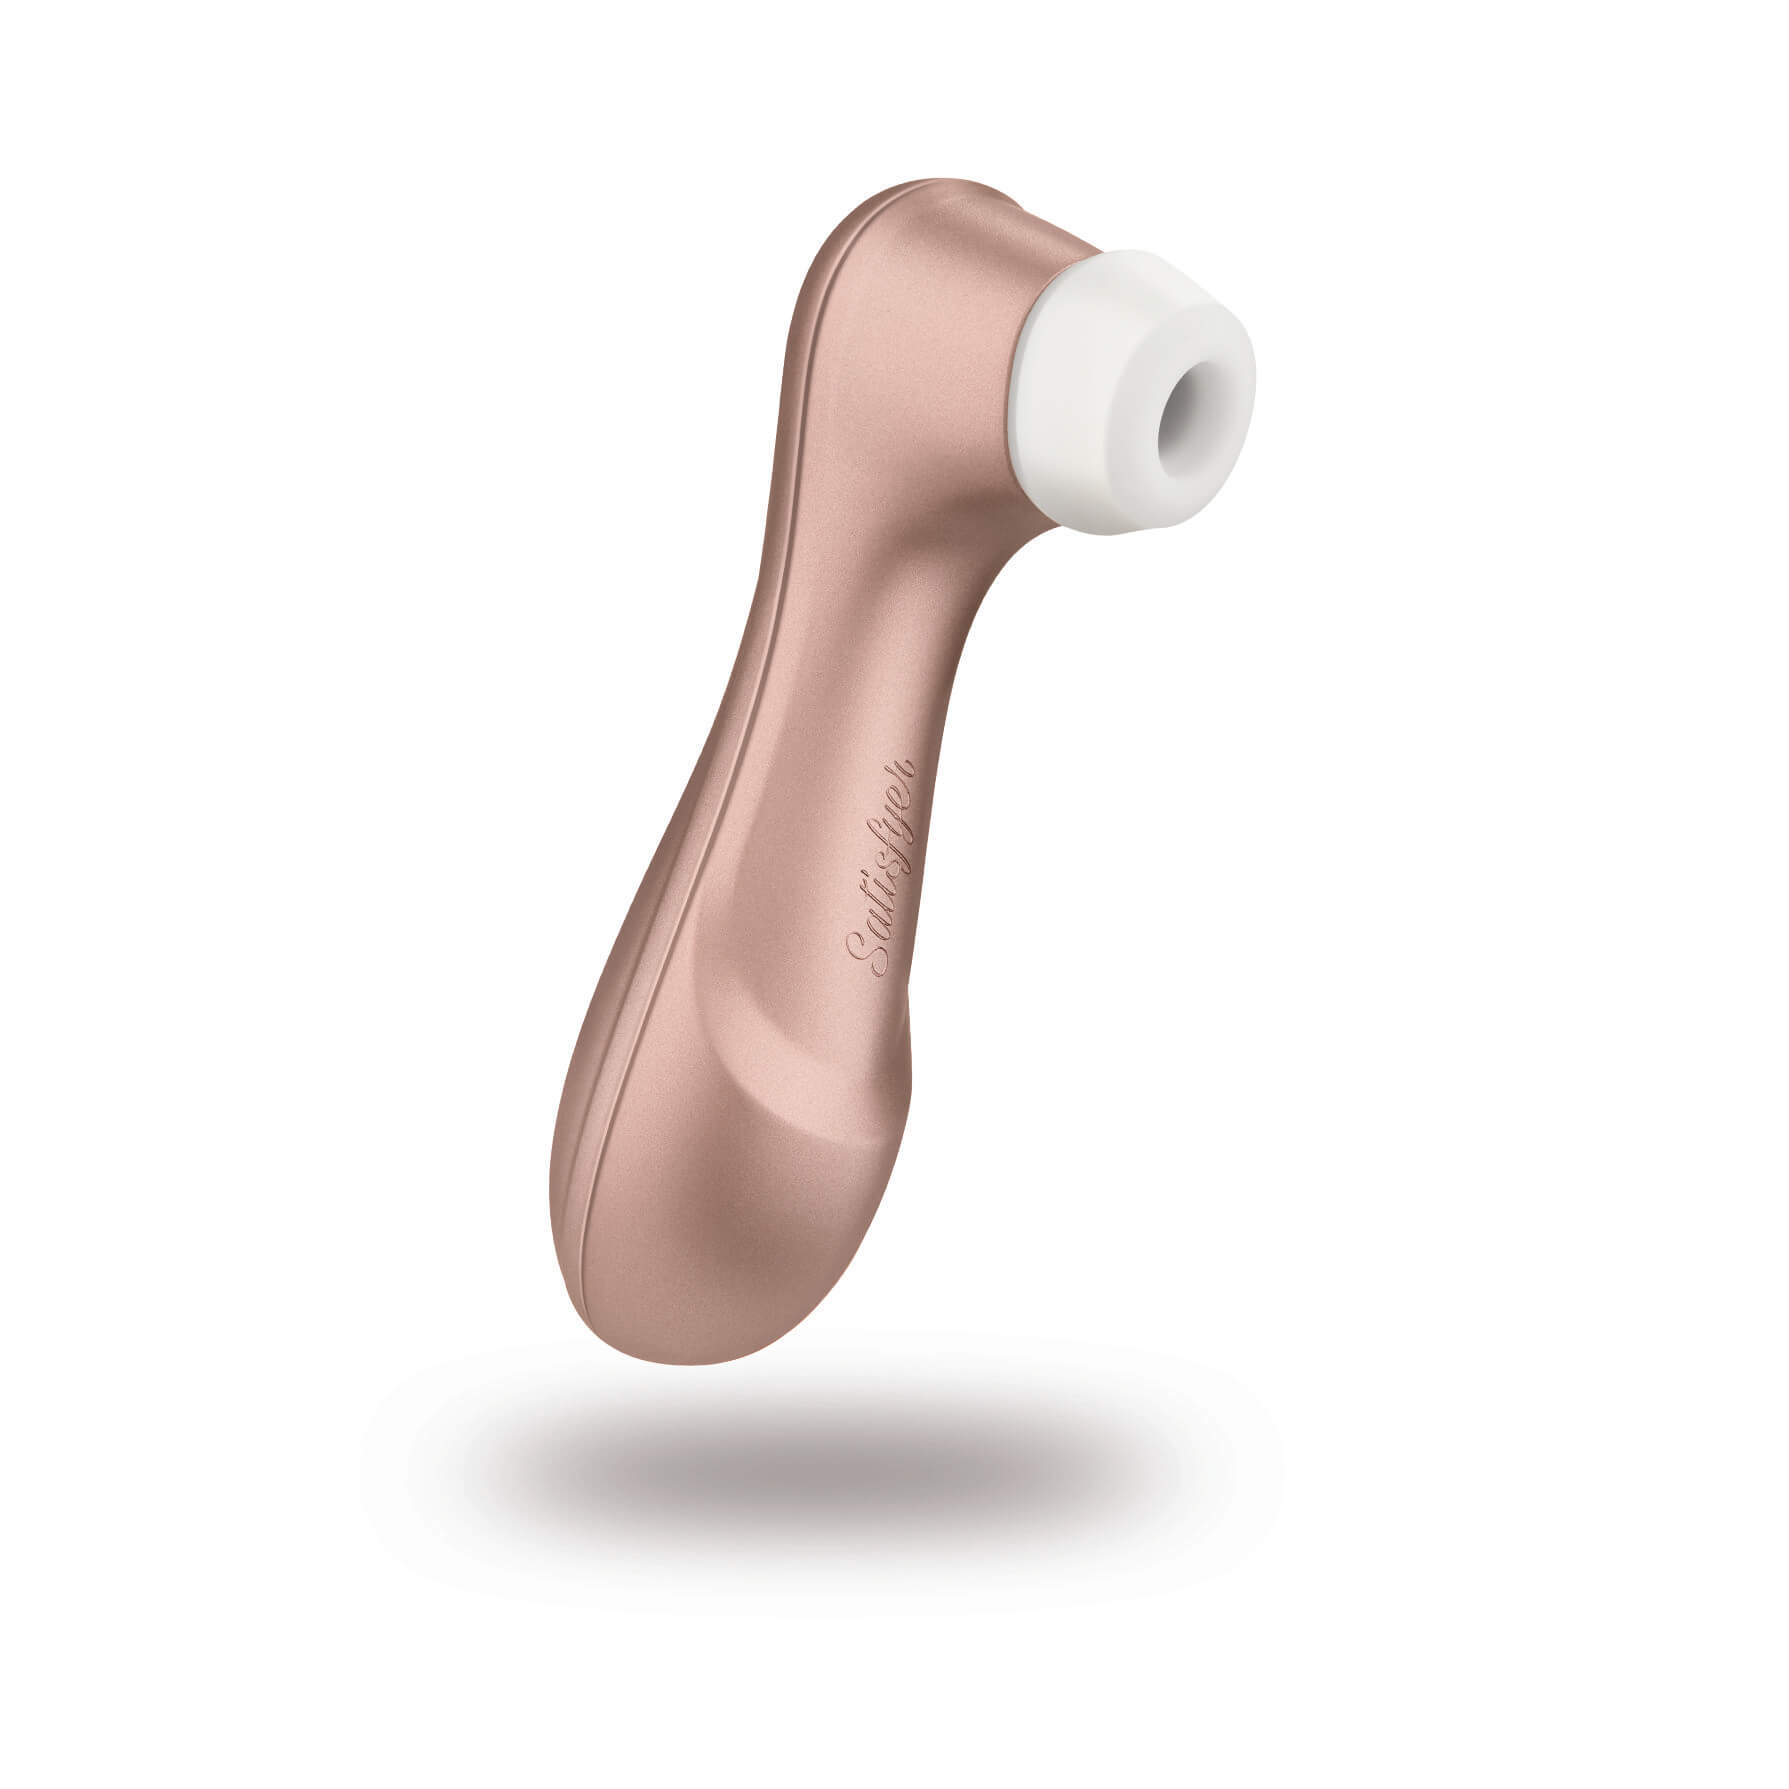 Satisfyer Pro 2 clitoral stimulator sex toy